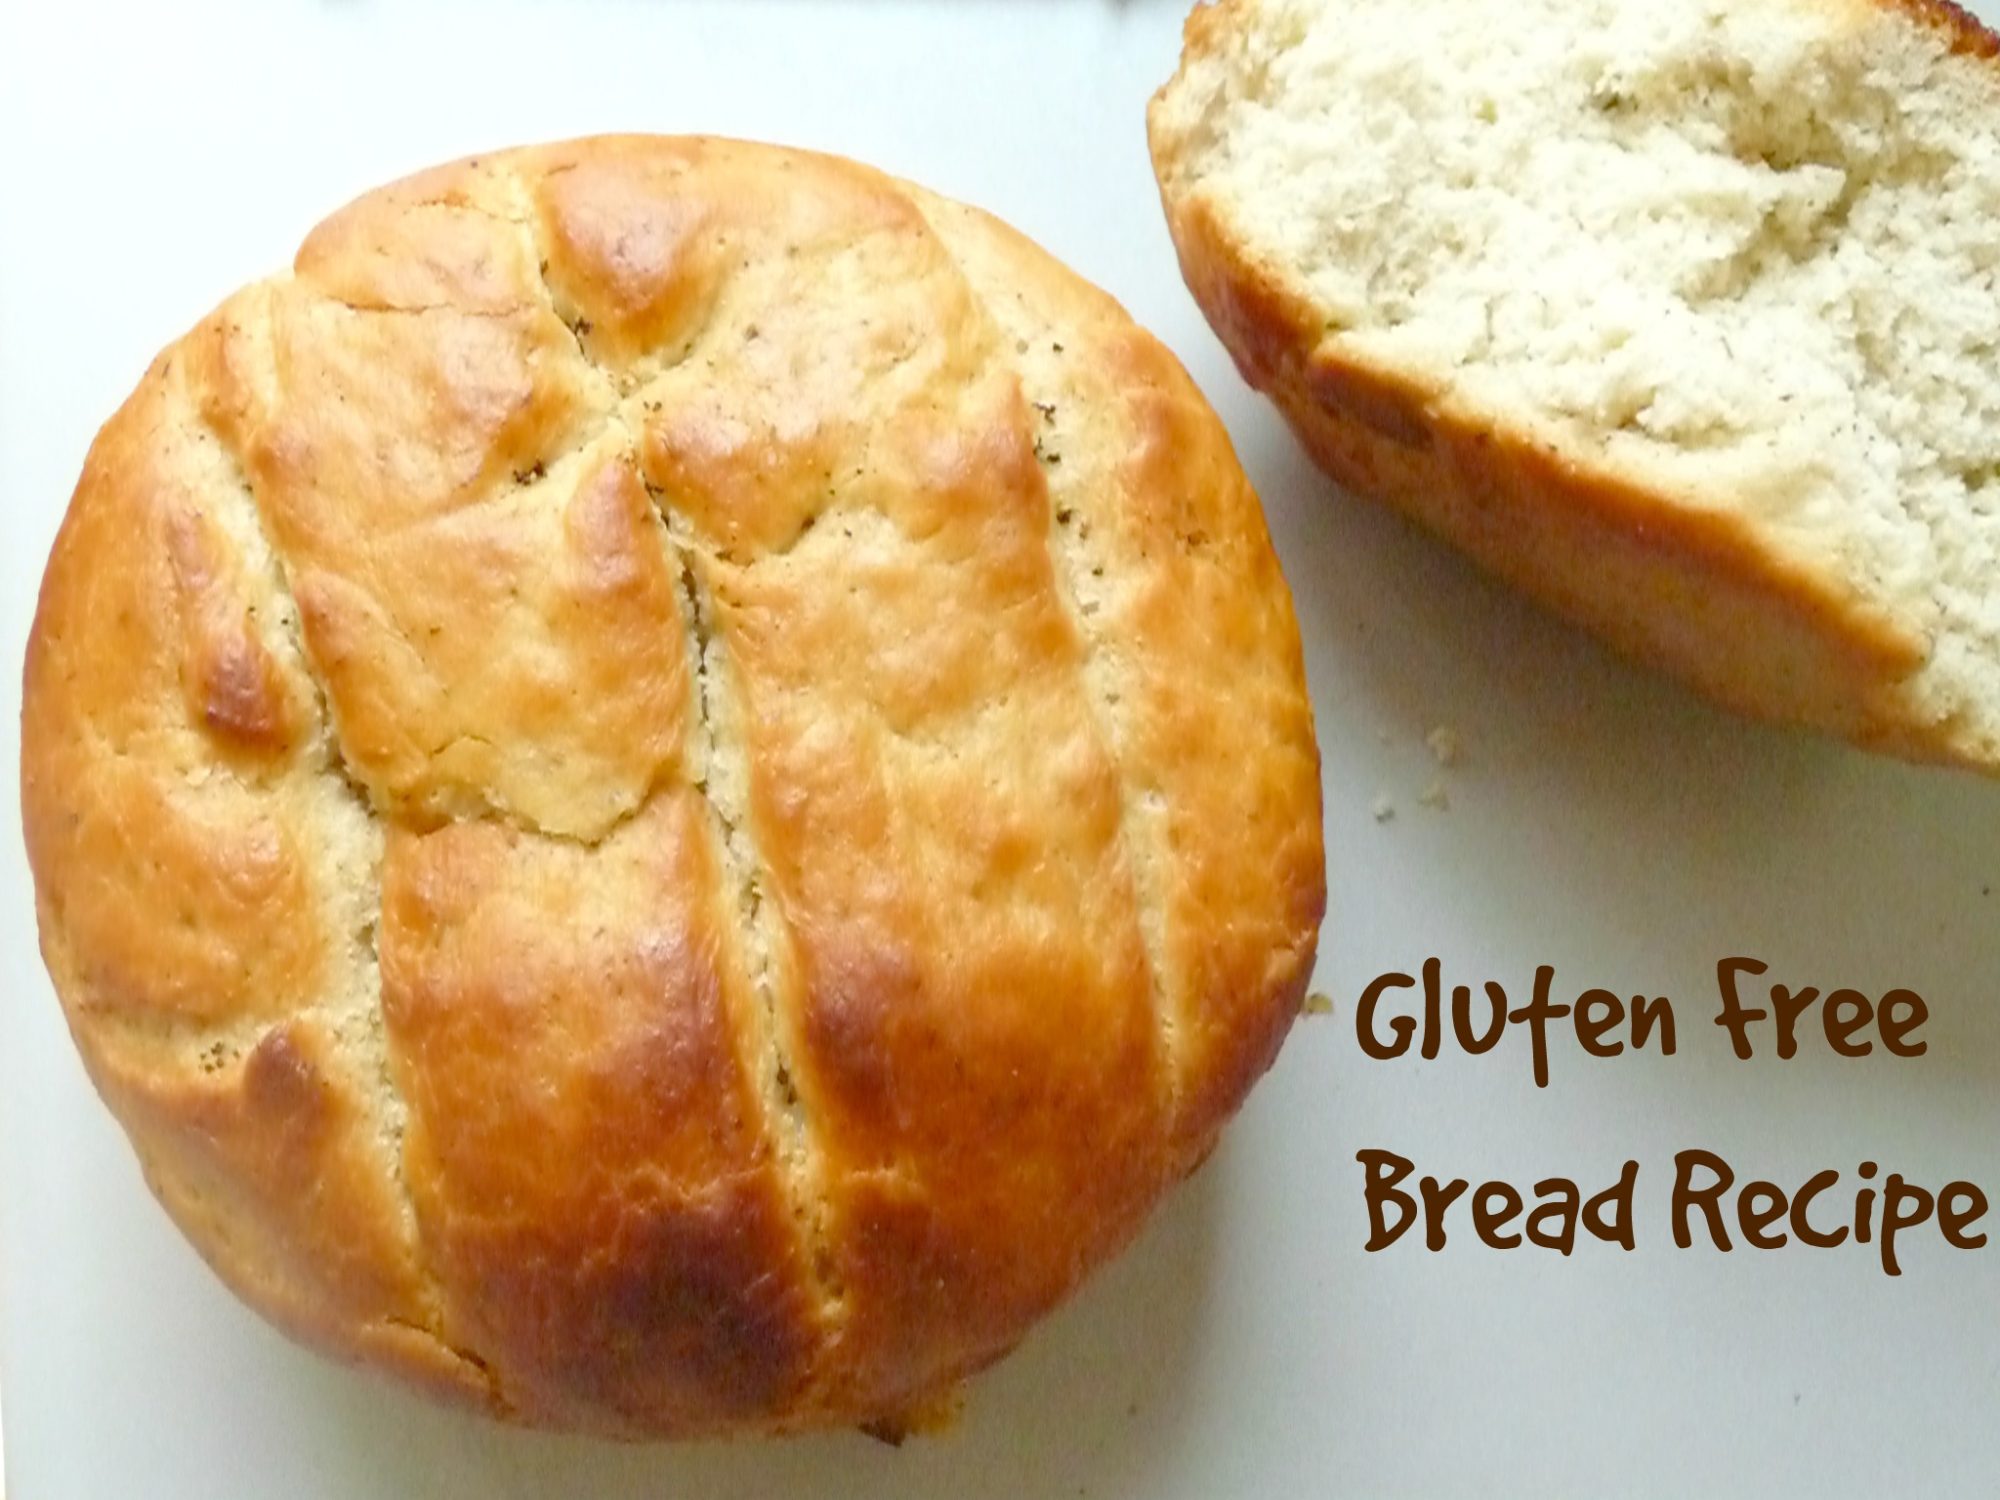 https://theseamanmom.com/wp-content/uploads/2015/02/Gluten-Free-bread-recipe-1.jpg